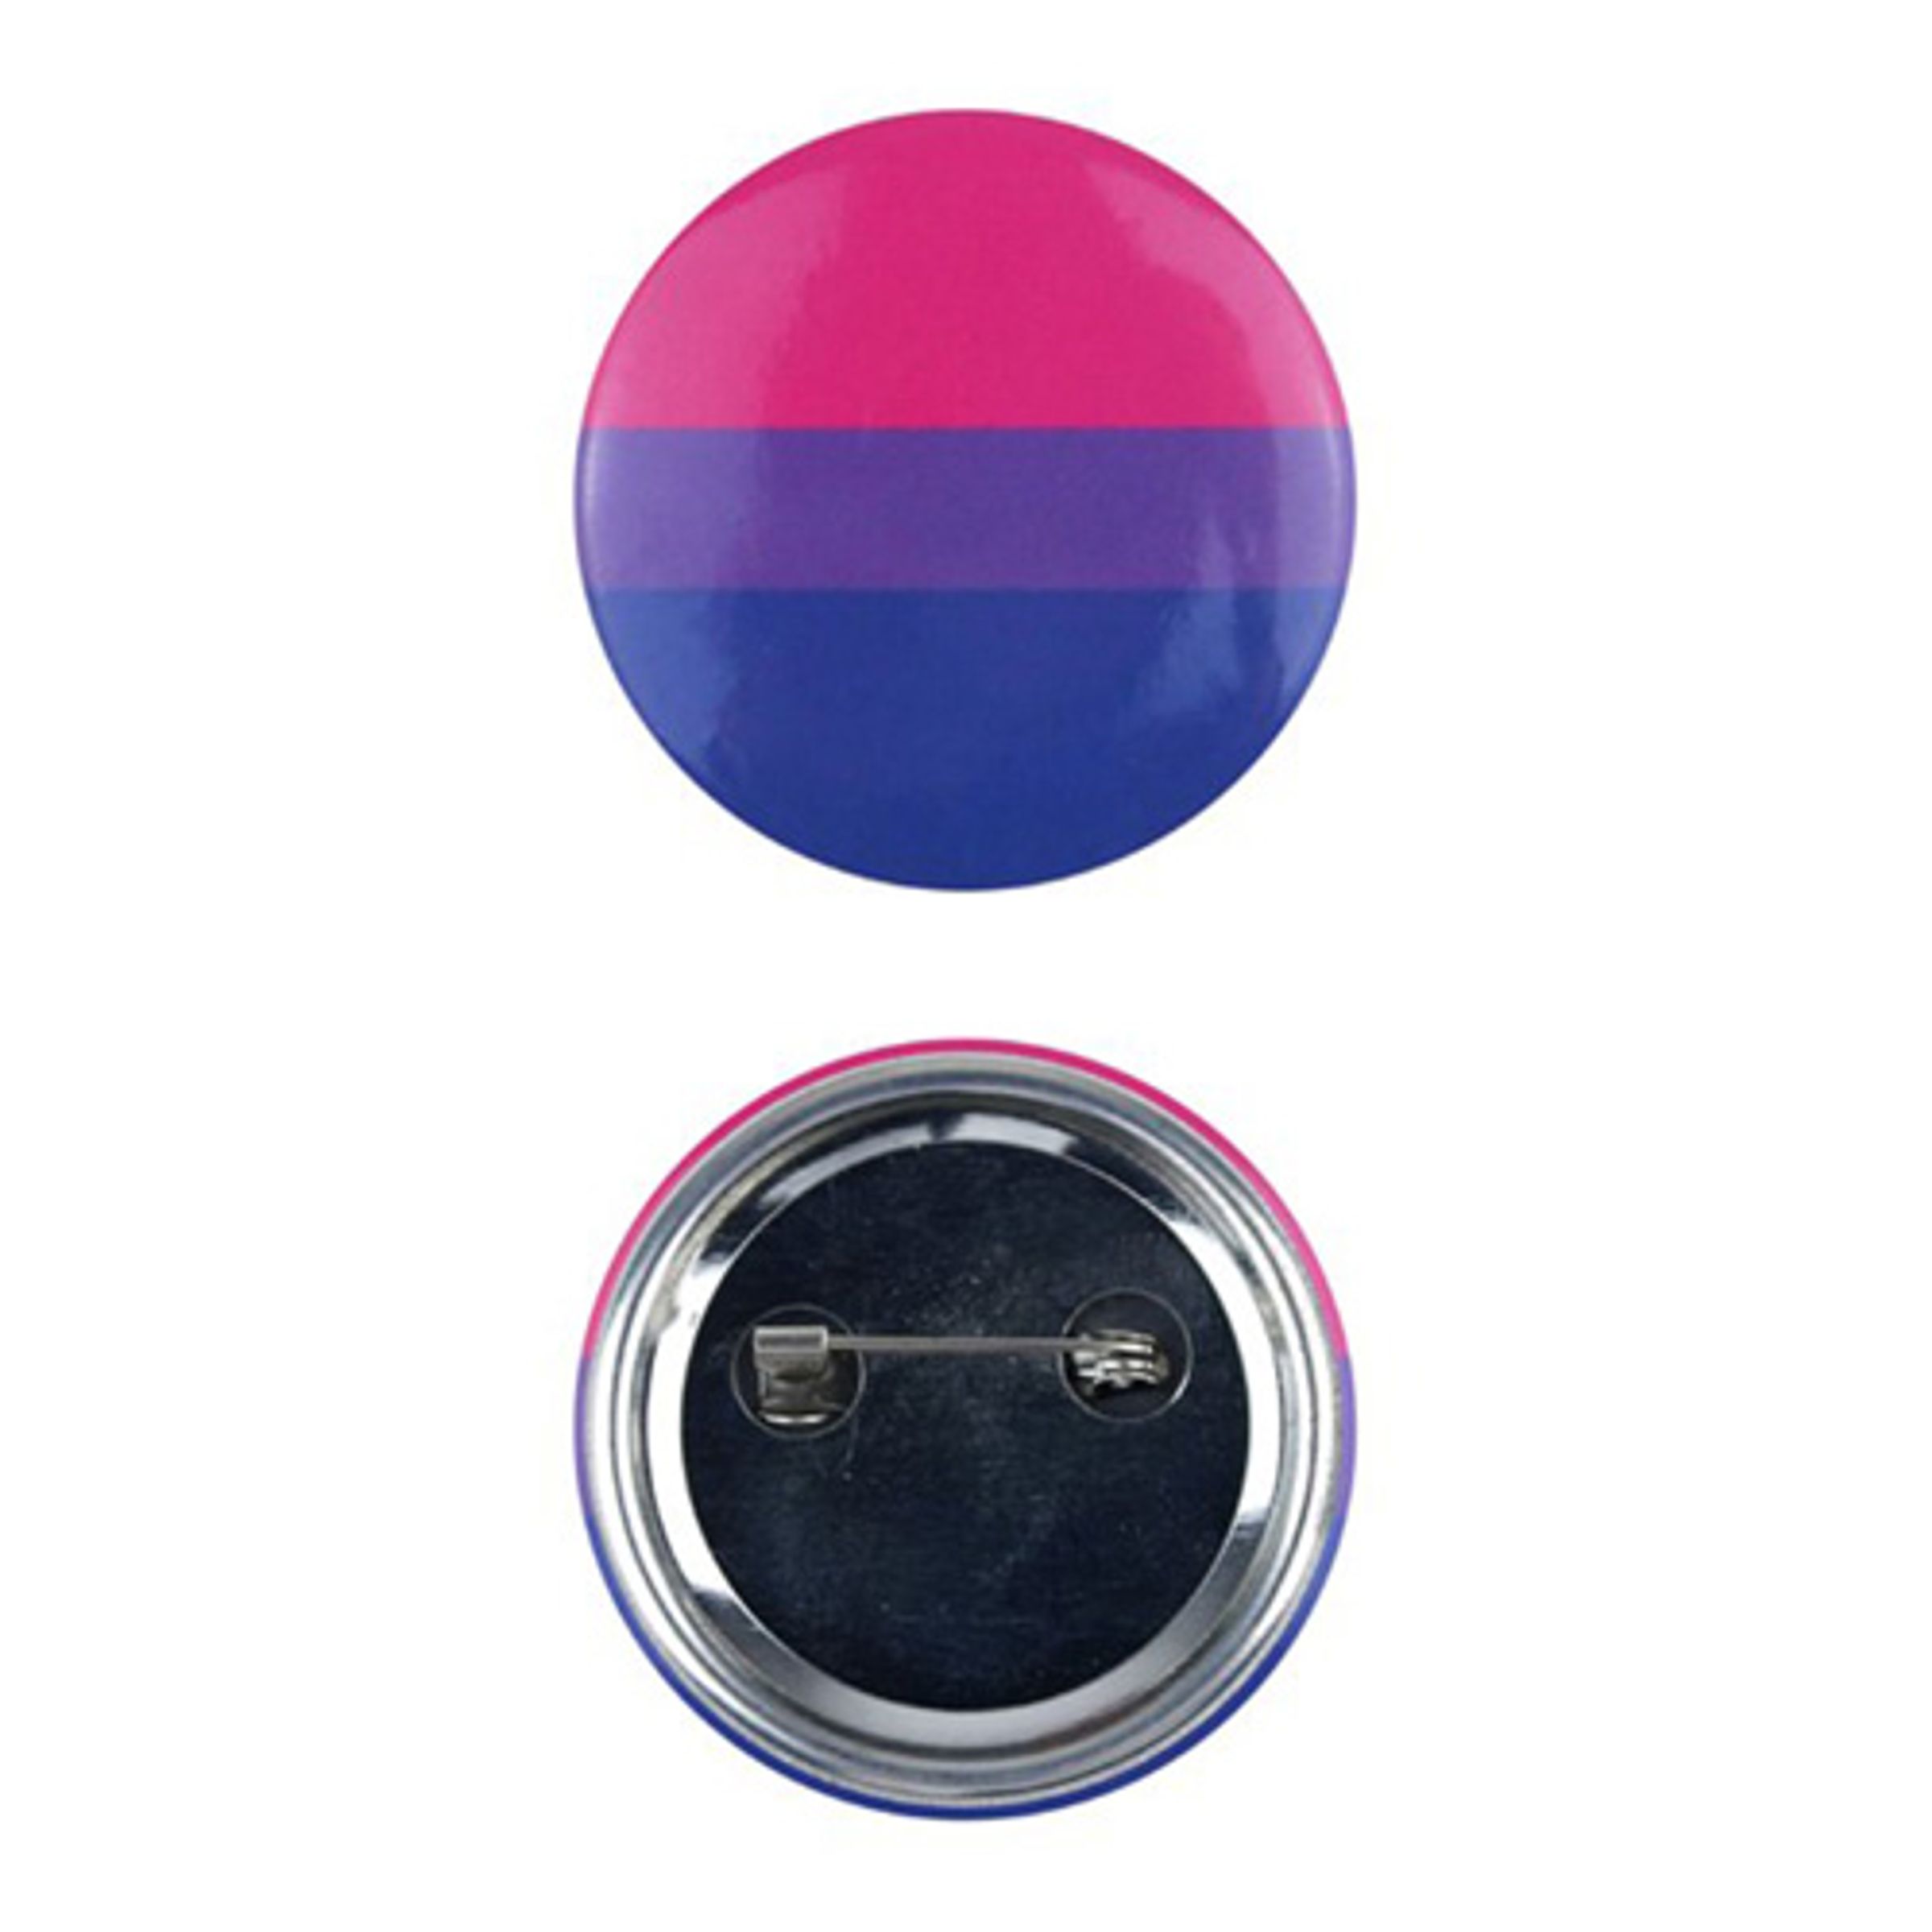 Emblem Bisexuell - 1-pack